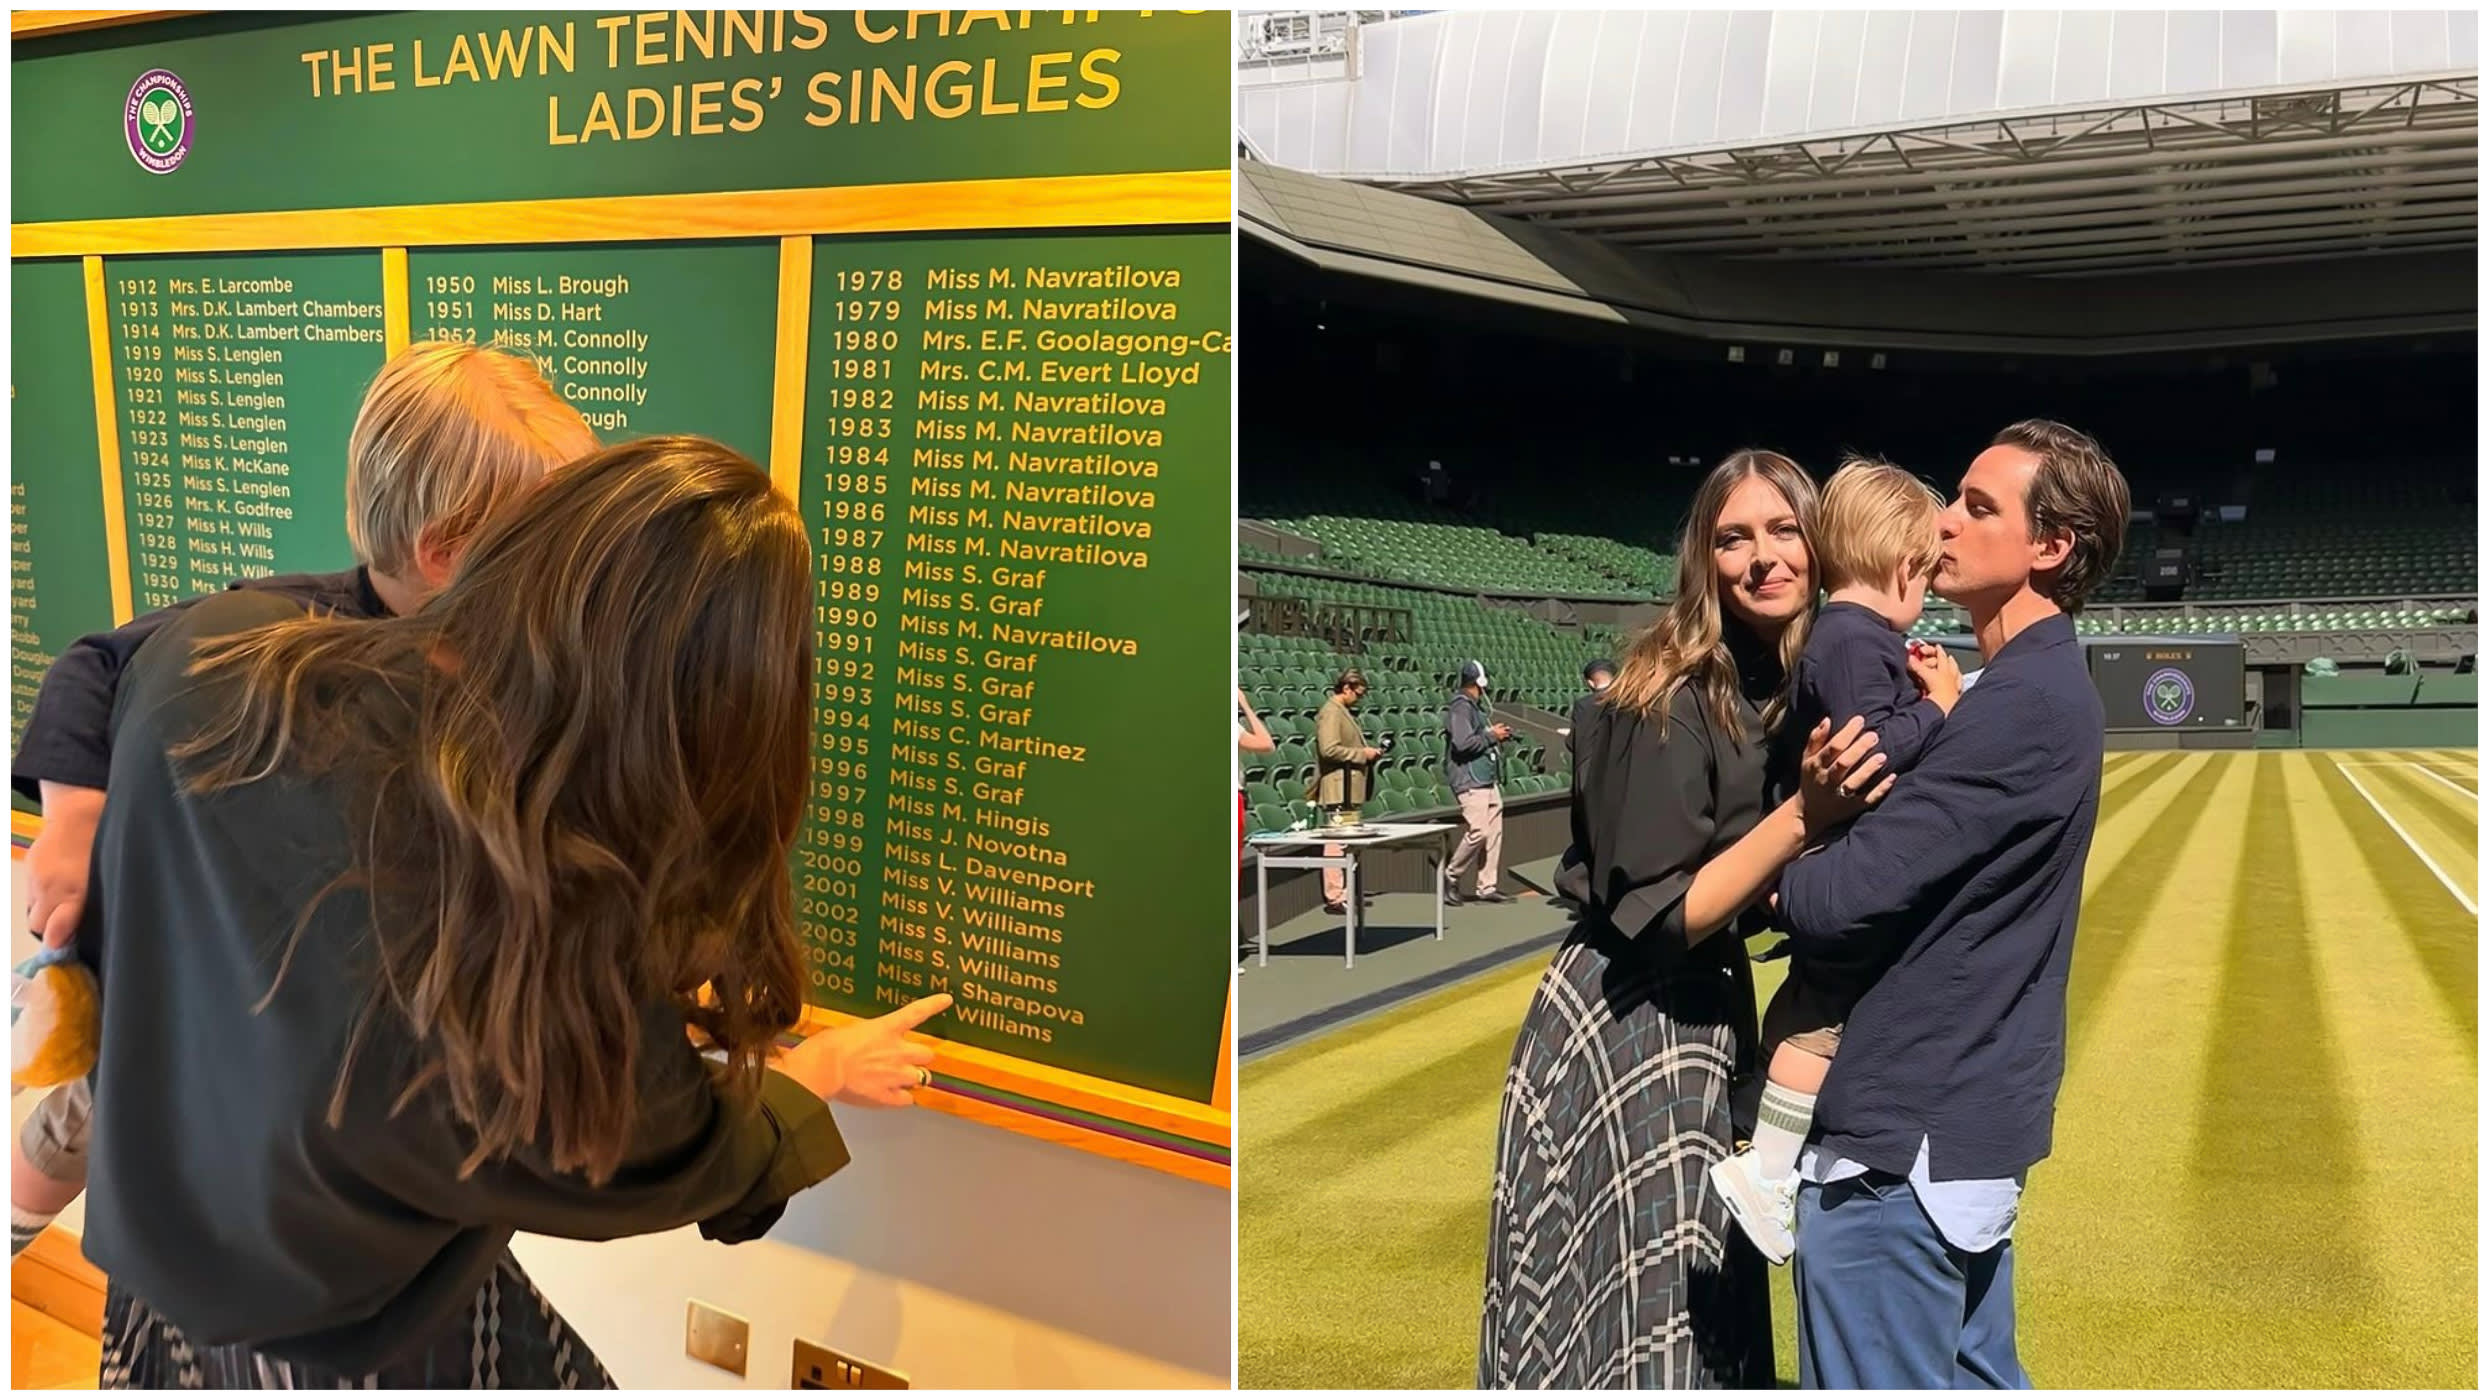 Maria Sharapova tours Wimbledon with fiancé Alexander, son Theodore 20 years after title run | Tennis.com